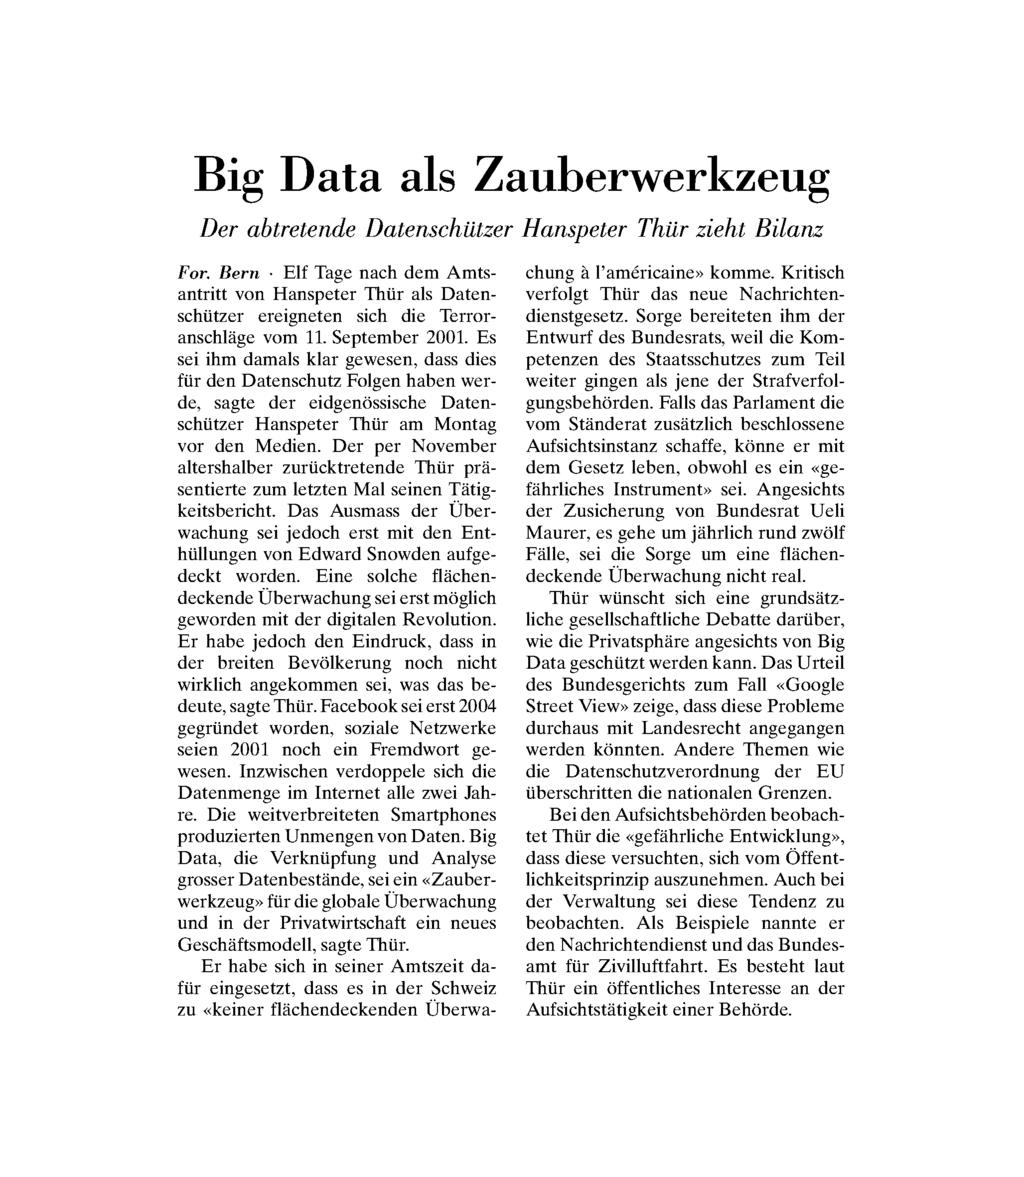 Big Data als Zauberwerkzeug.